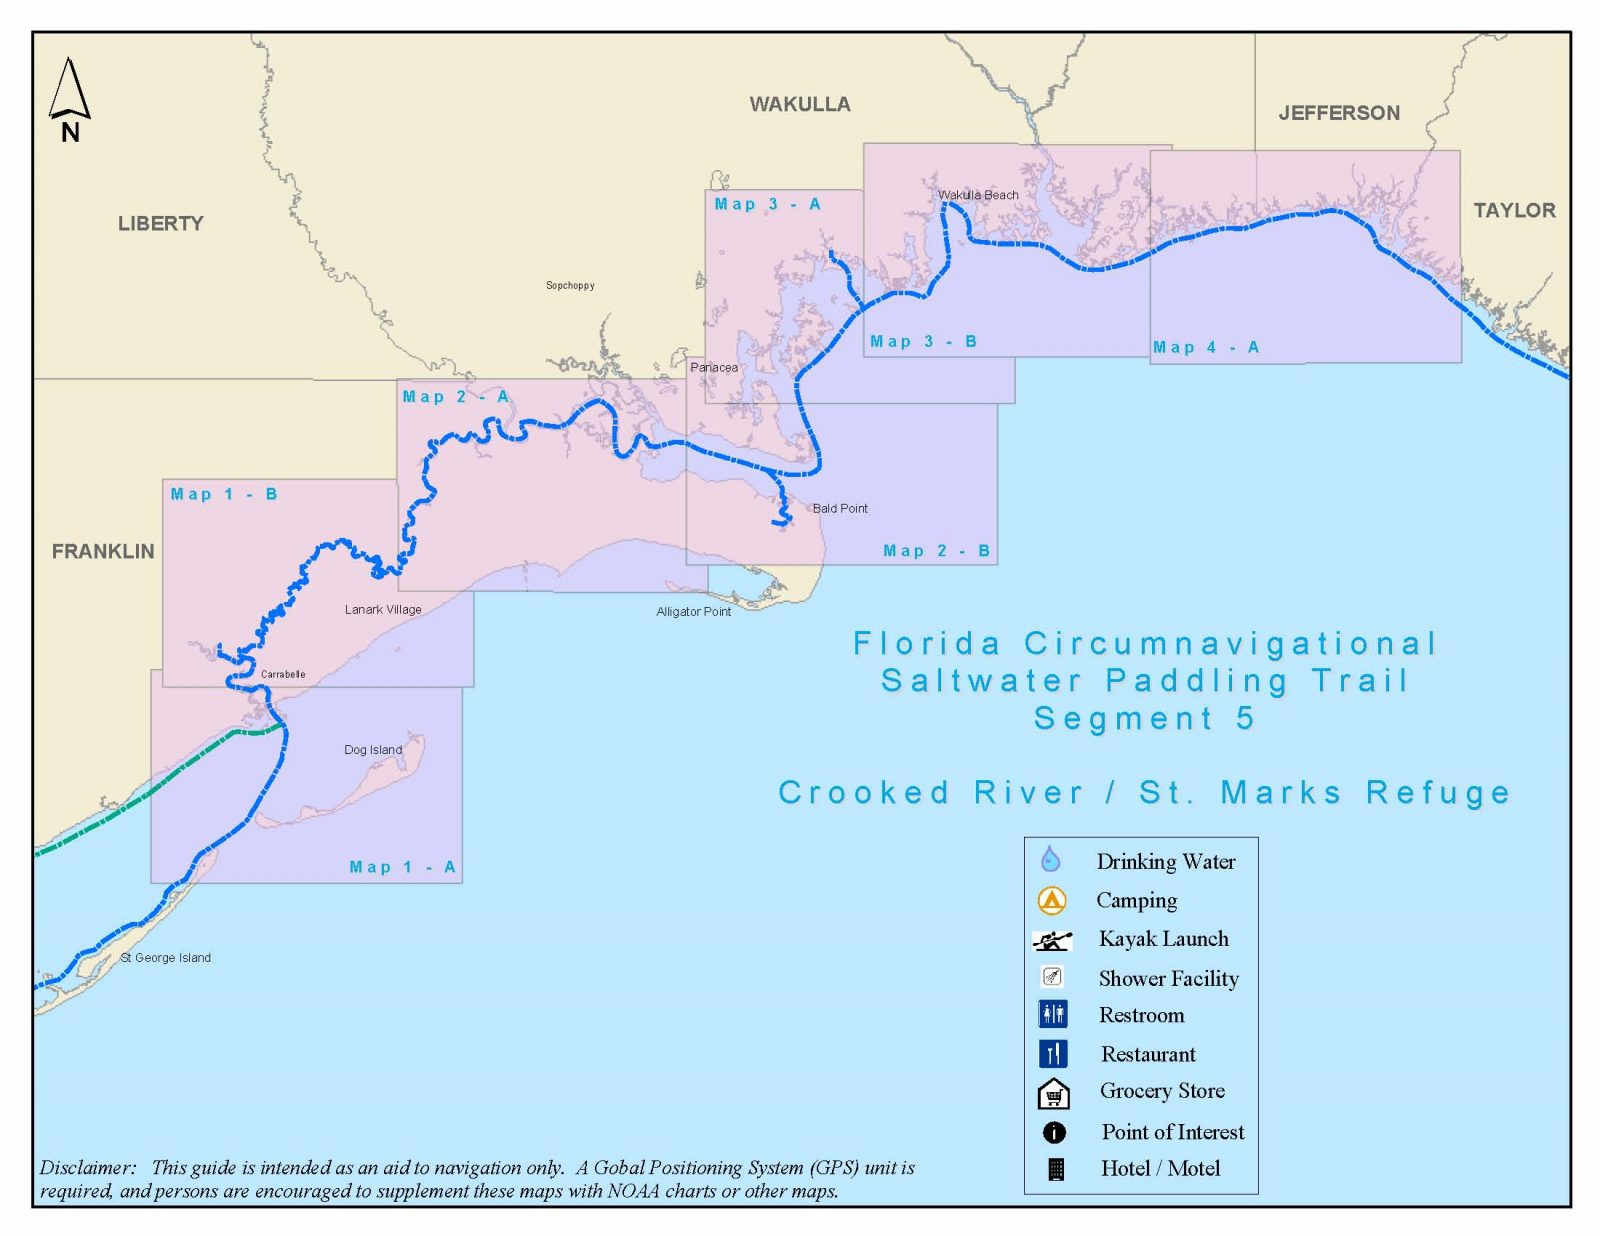 Florida Circumnavigational Saltwater Paddling Trail - Segment 5 - Florida Paddling Trail Maps